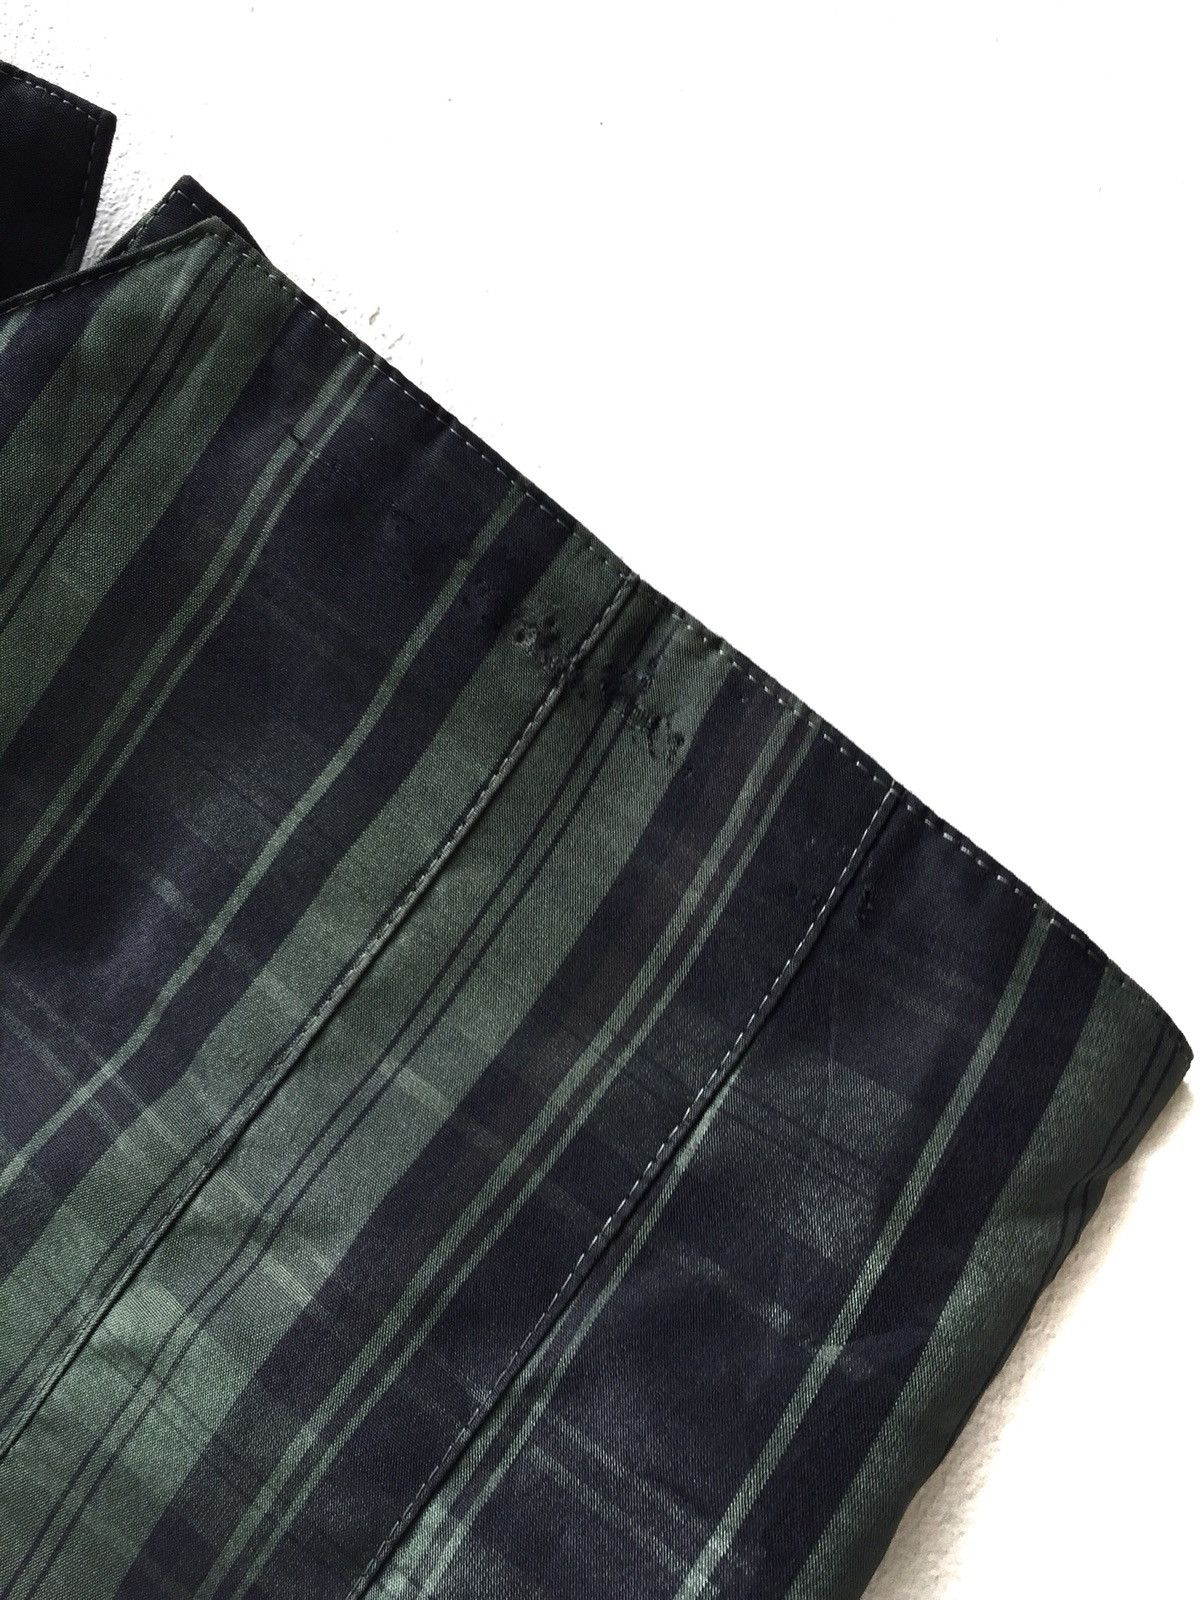 Vintage Vintage Norma Kamali Checkered High Waist Pants Size US 26 / EU 42 - 7 Thumbnail